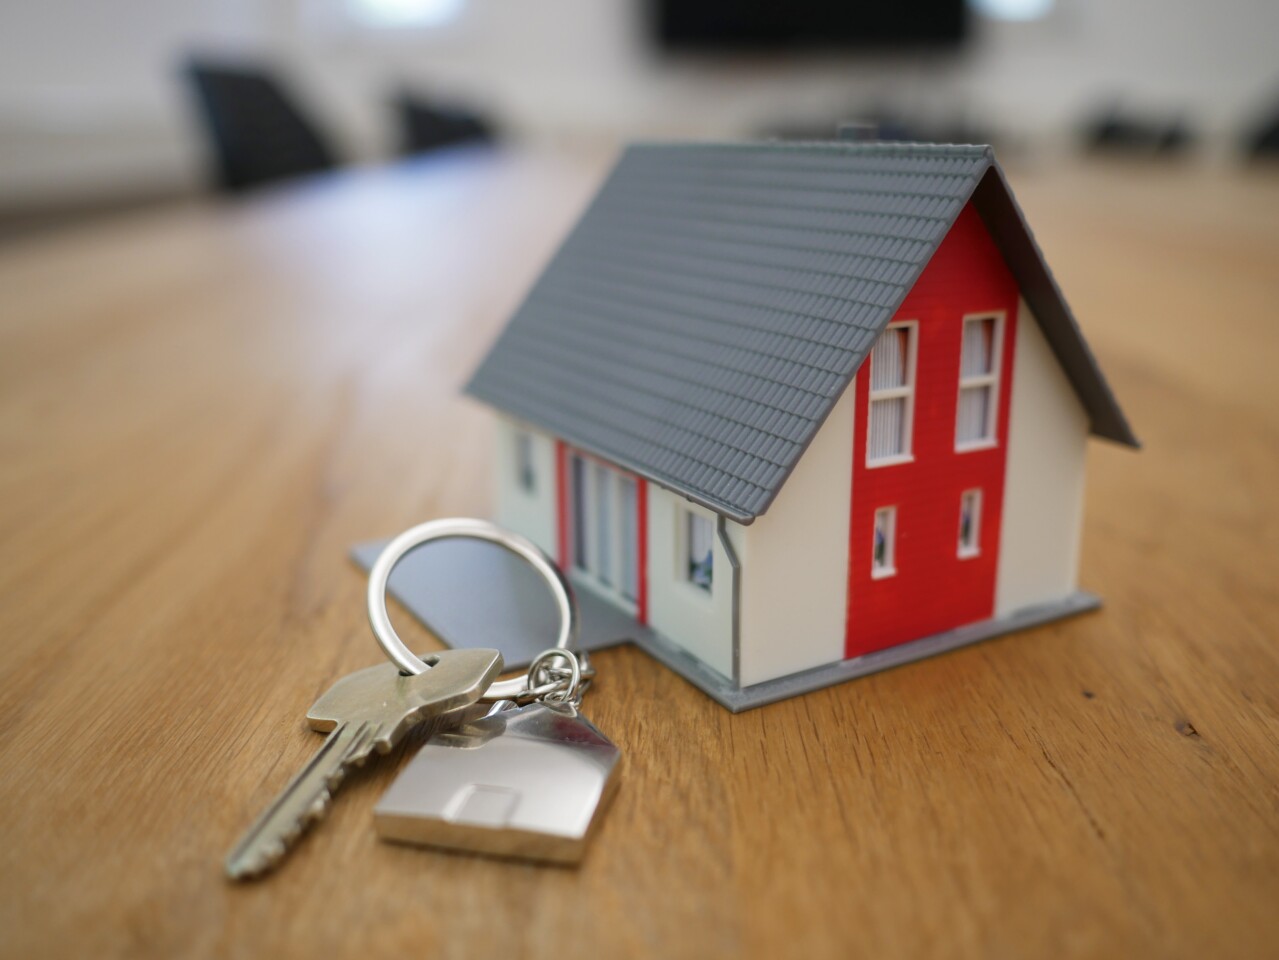 Property - House and Keys